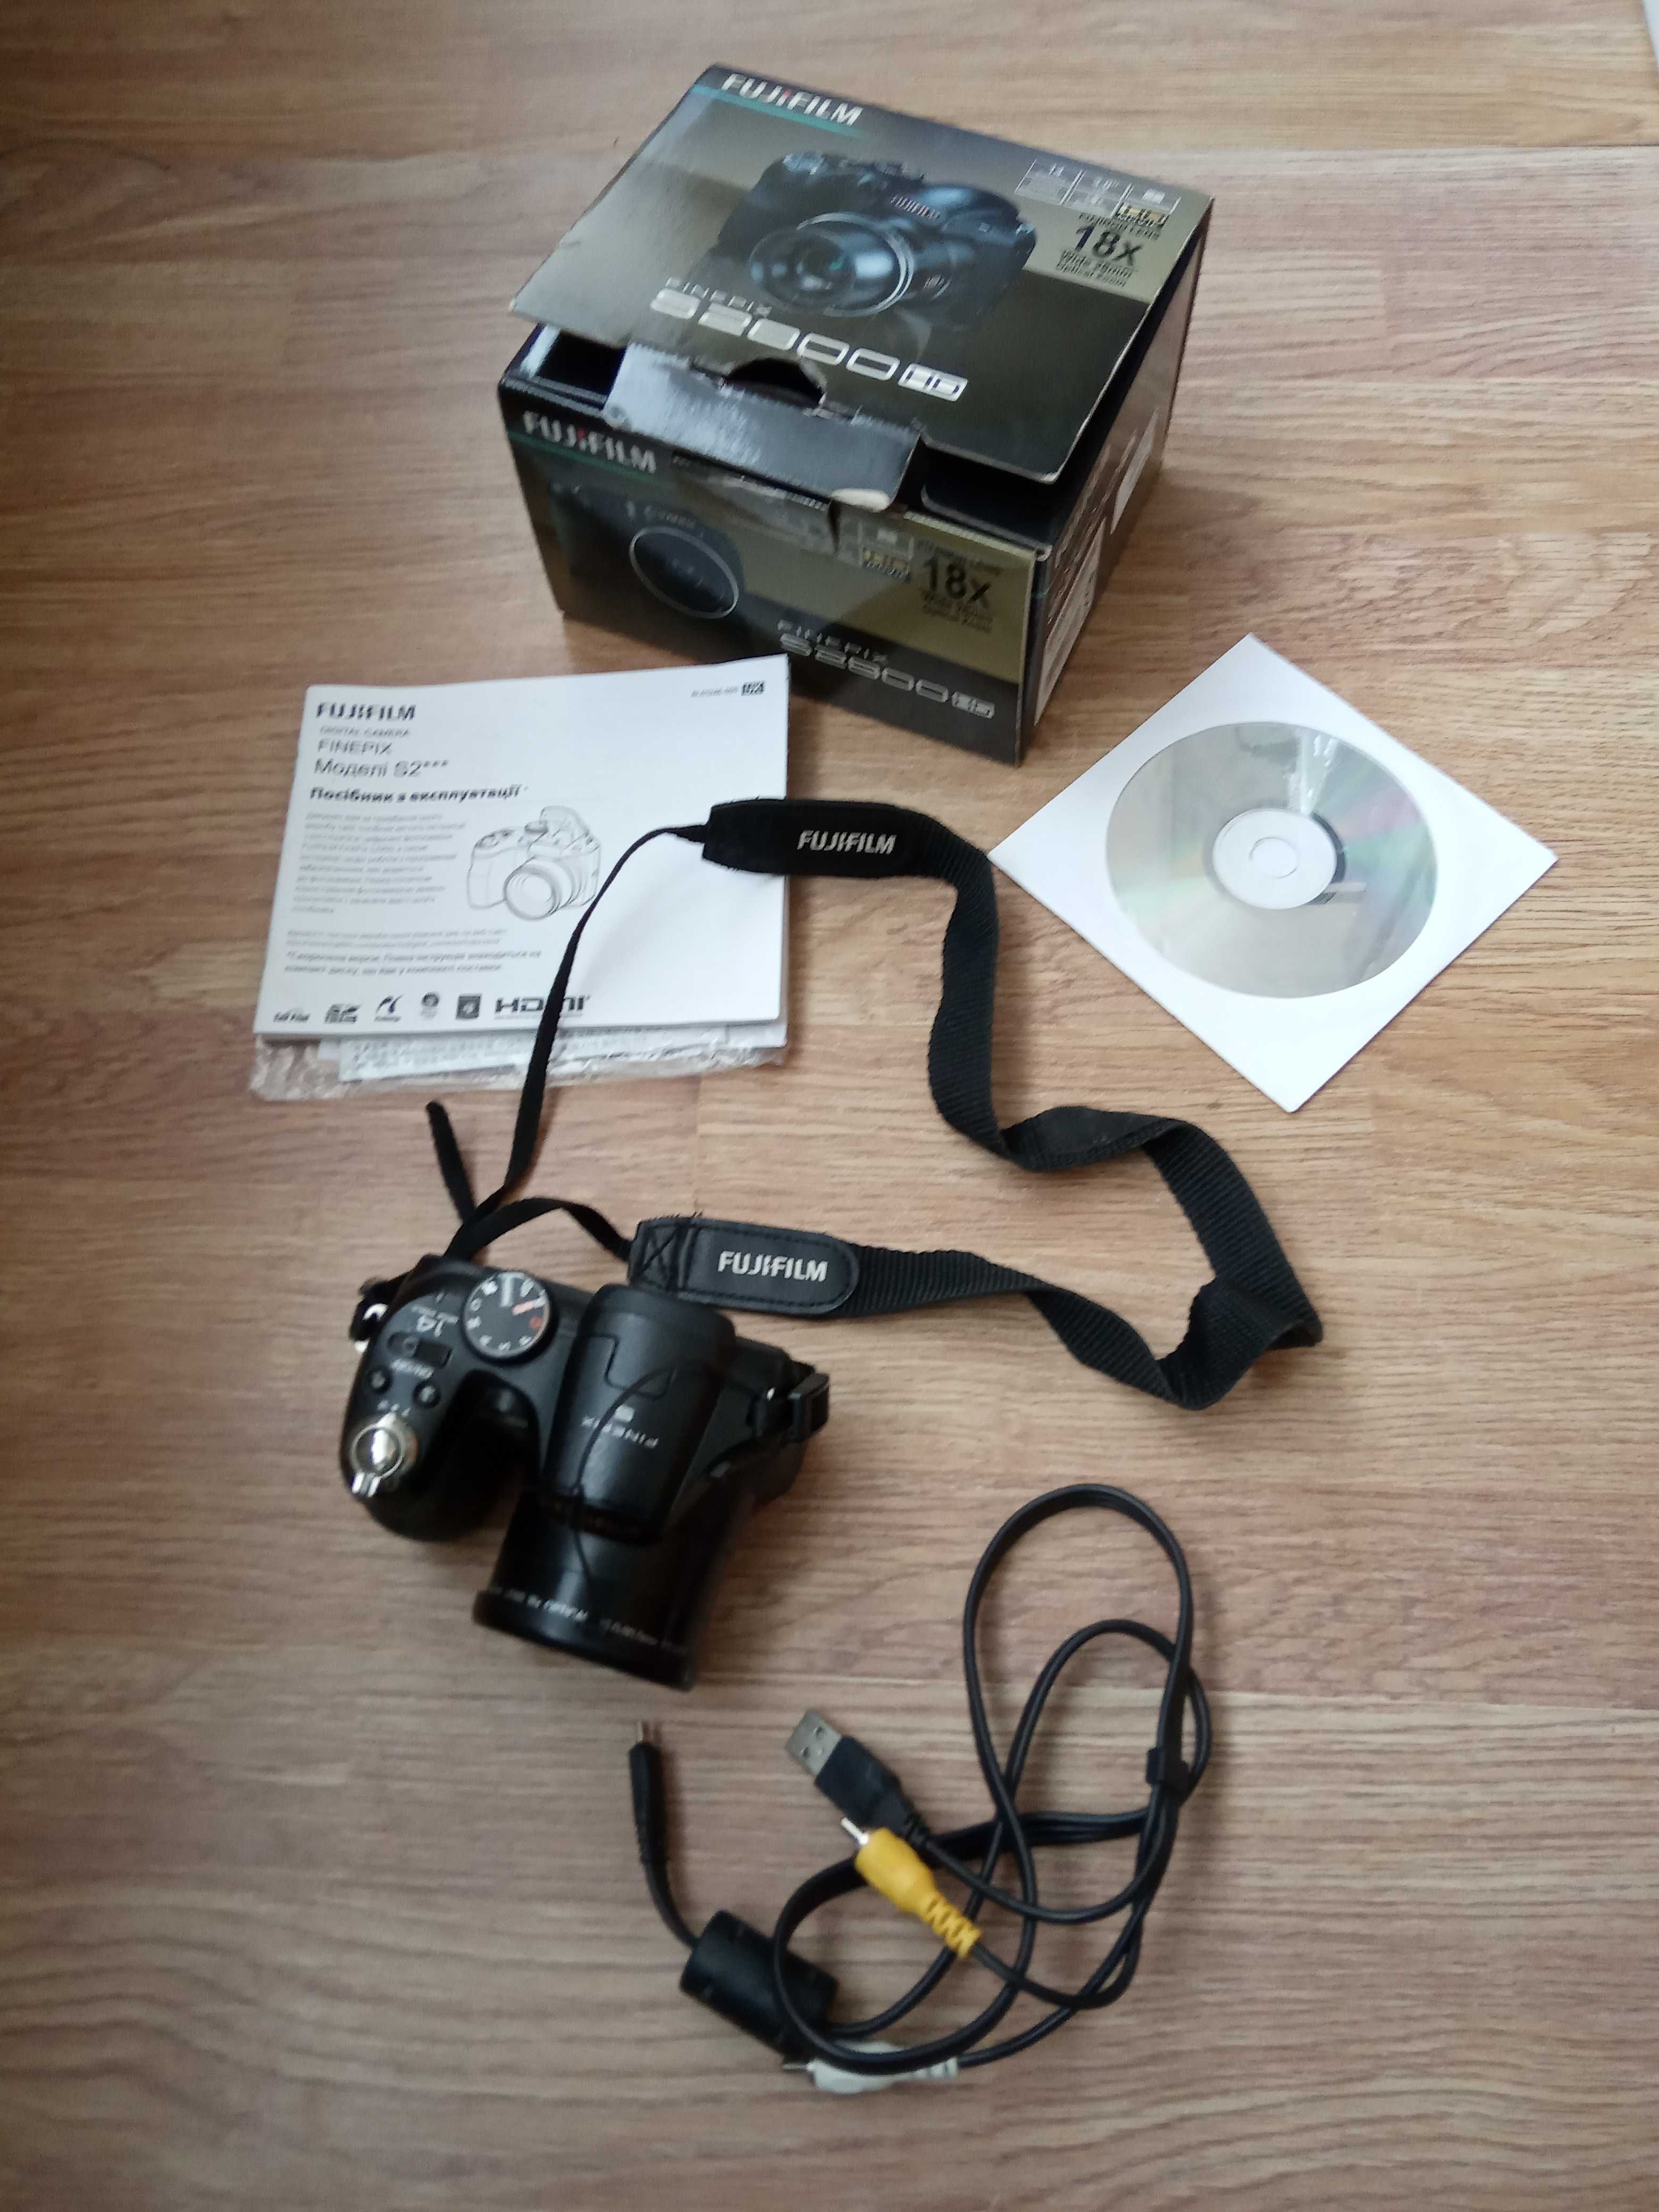 Фотоаппарат Fuji FinePix S2800HD
Fujifilm